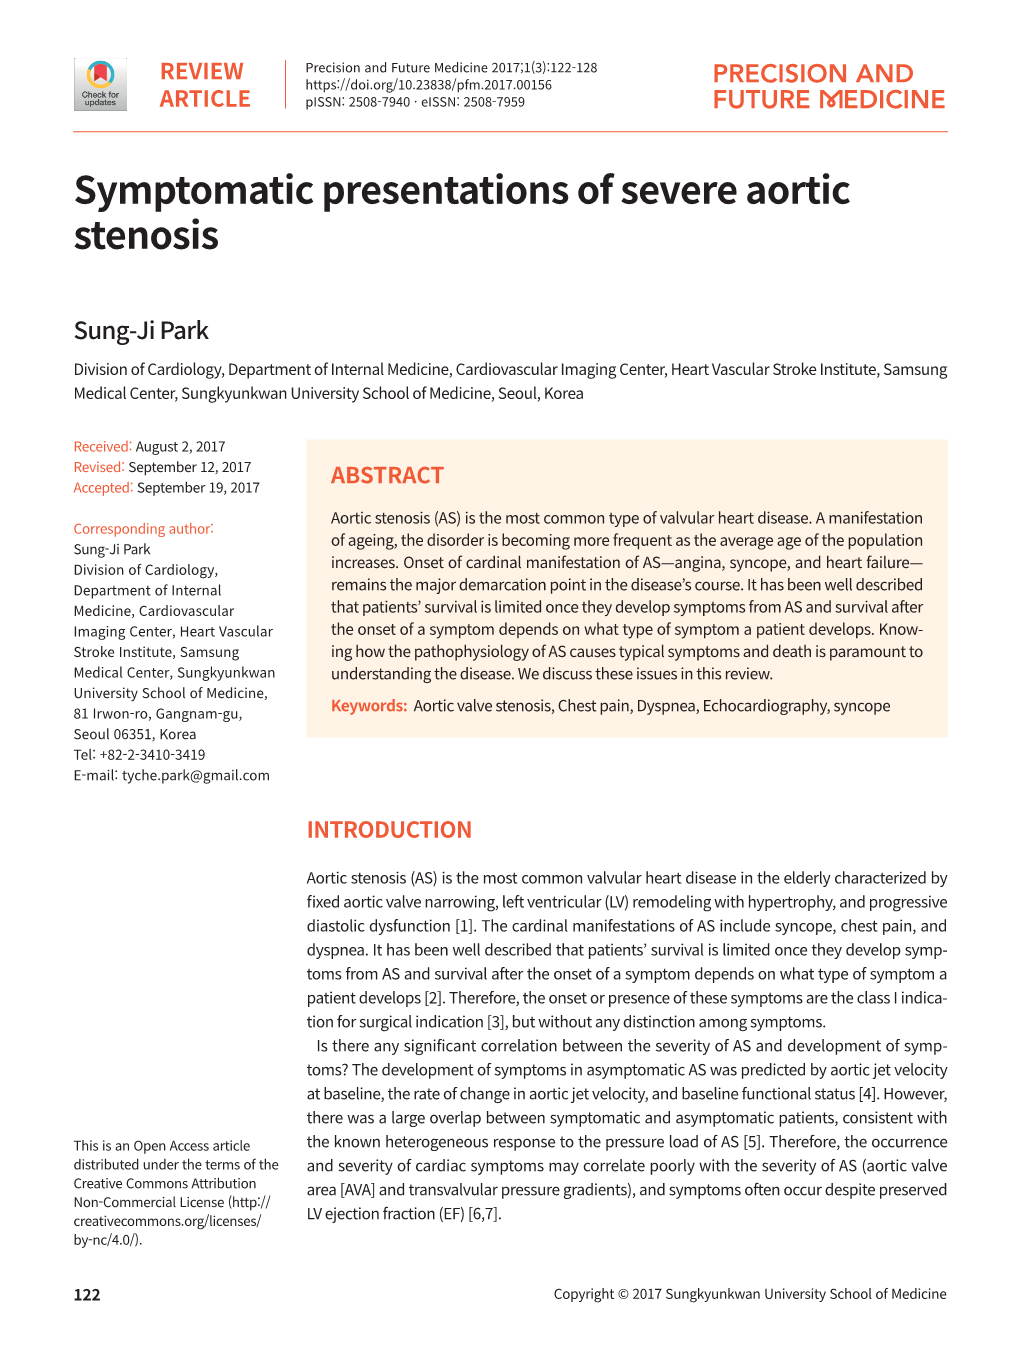 Symptomatic Presentations of Severe Aortic Stenosis